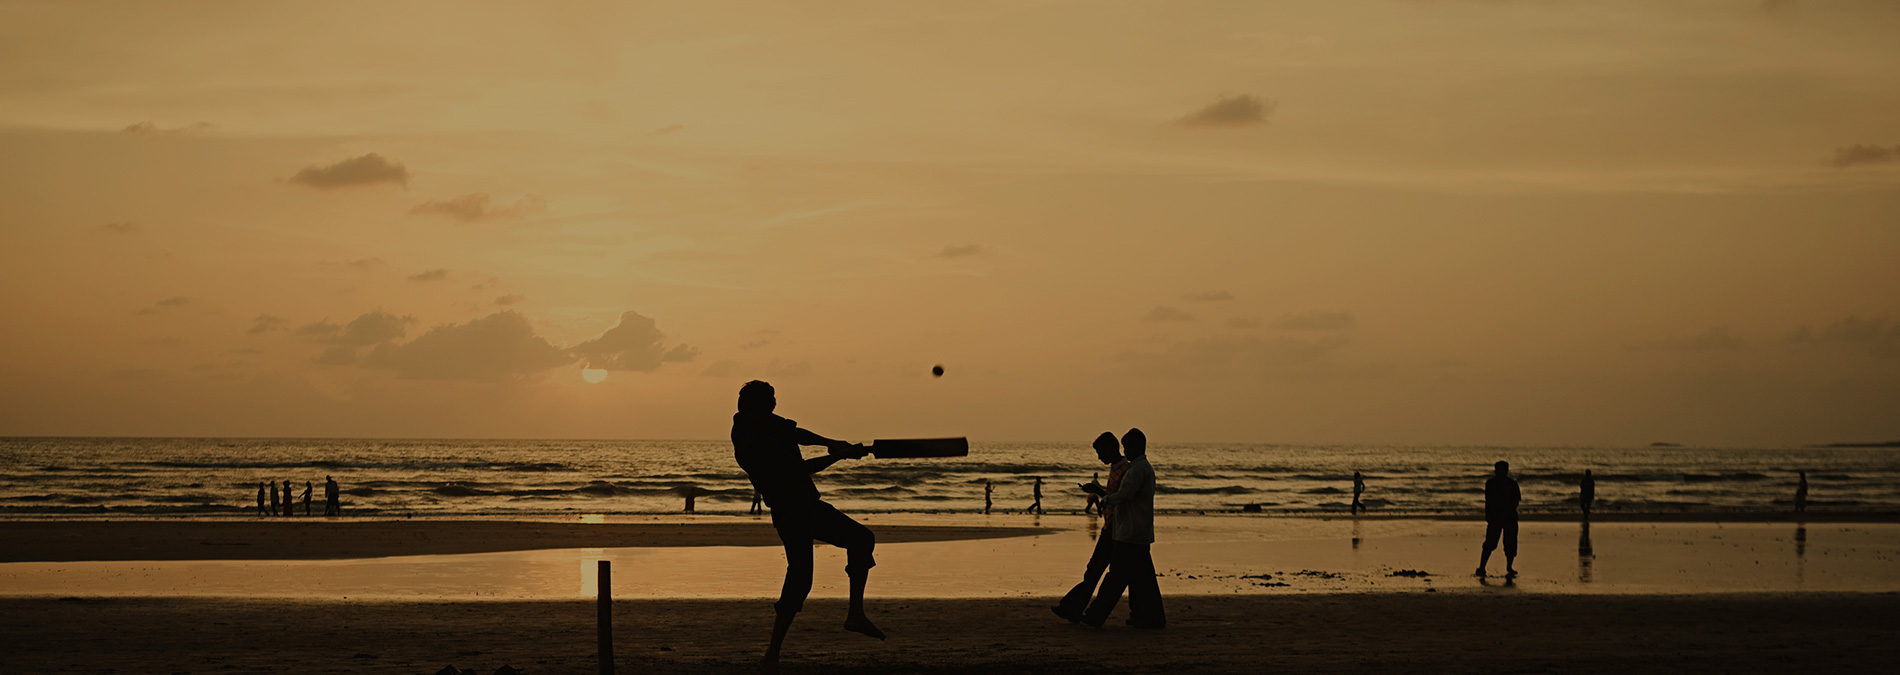 cricket-on-beach-silhouette